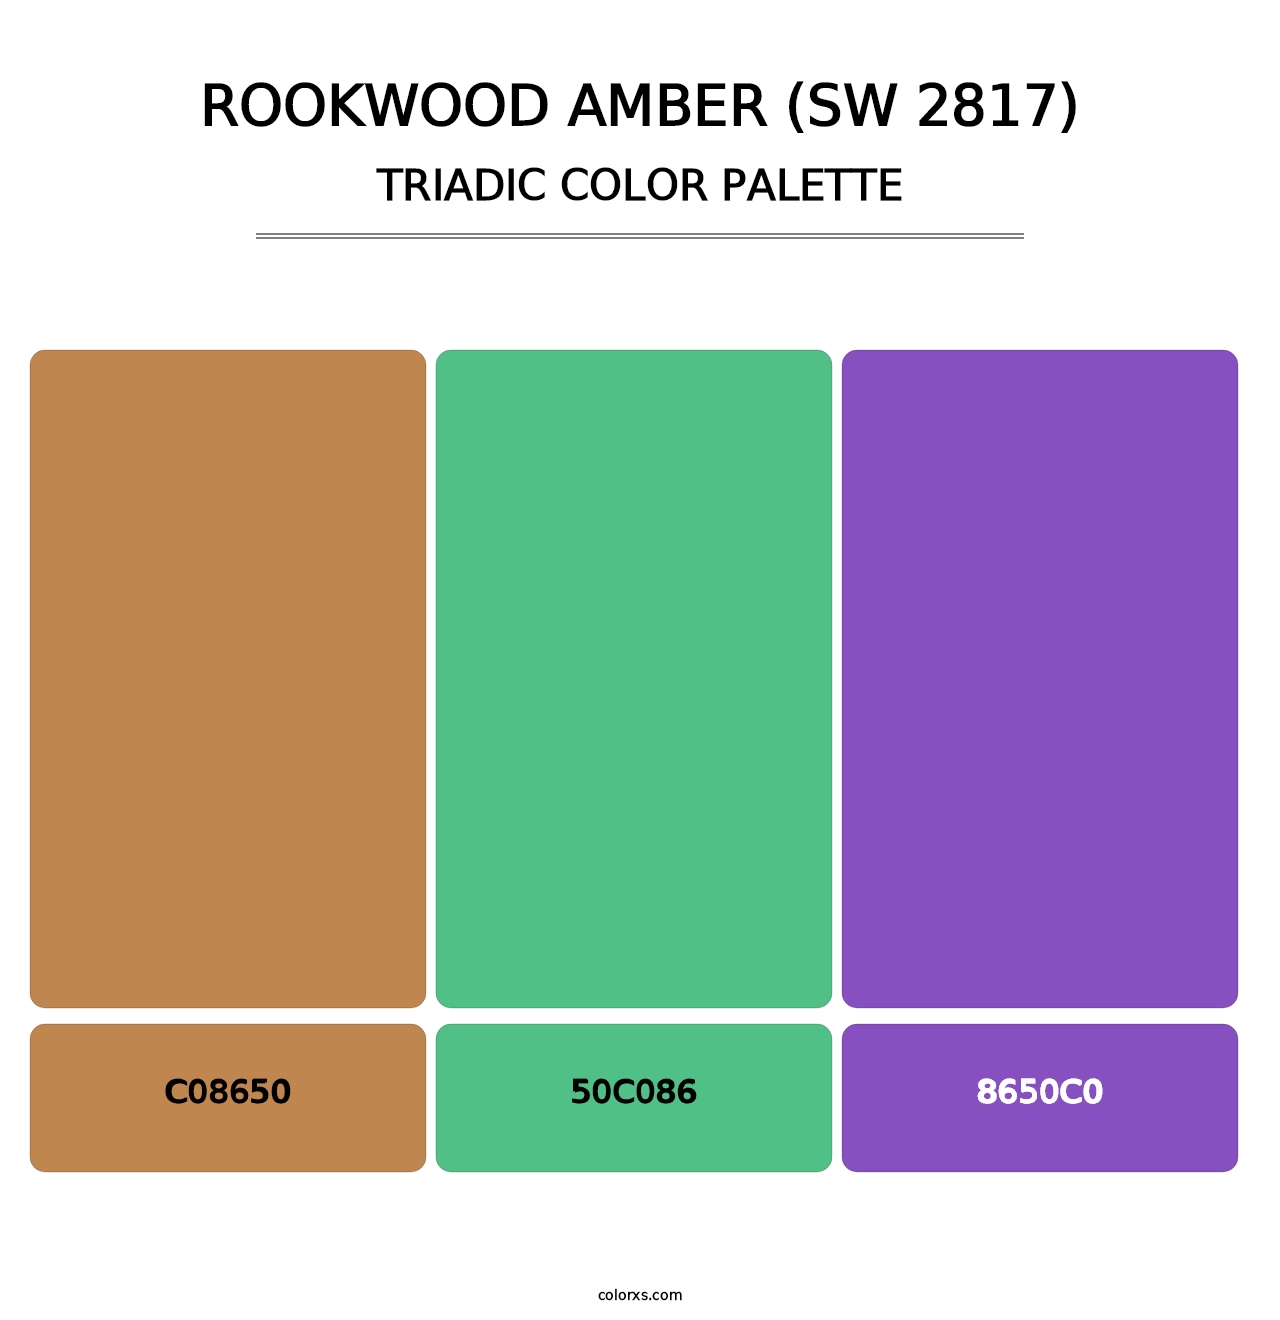 Rookwood Amber (SW 2817) - Triadic Color Palette